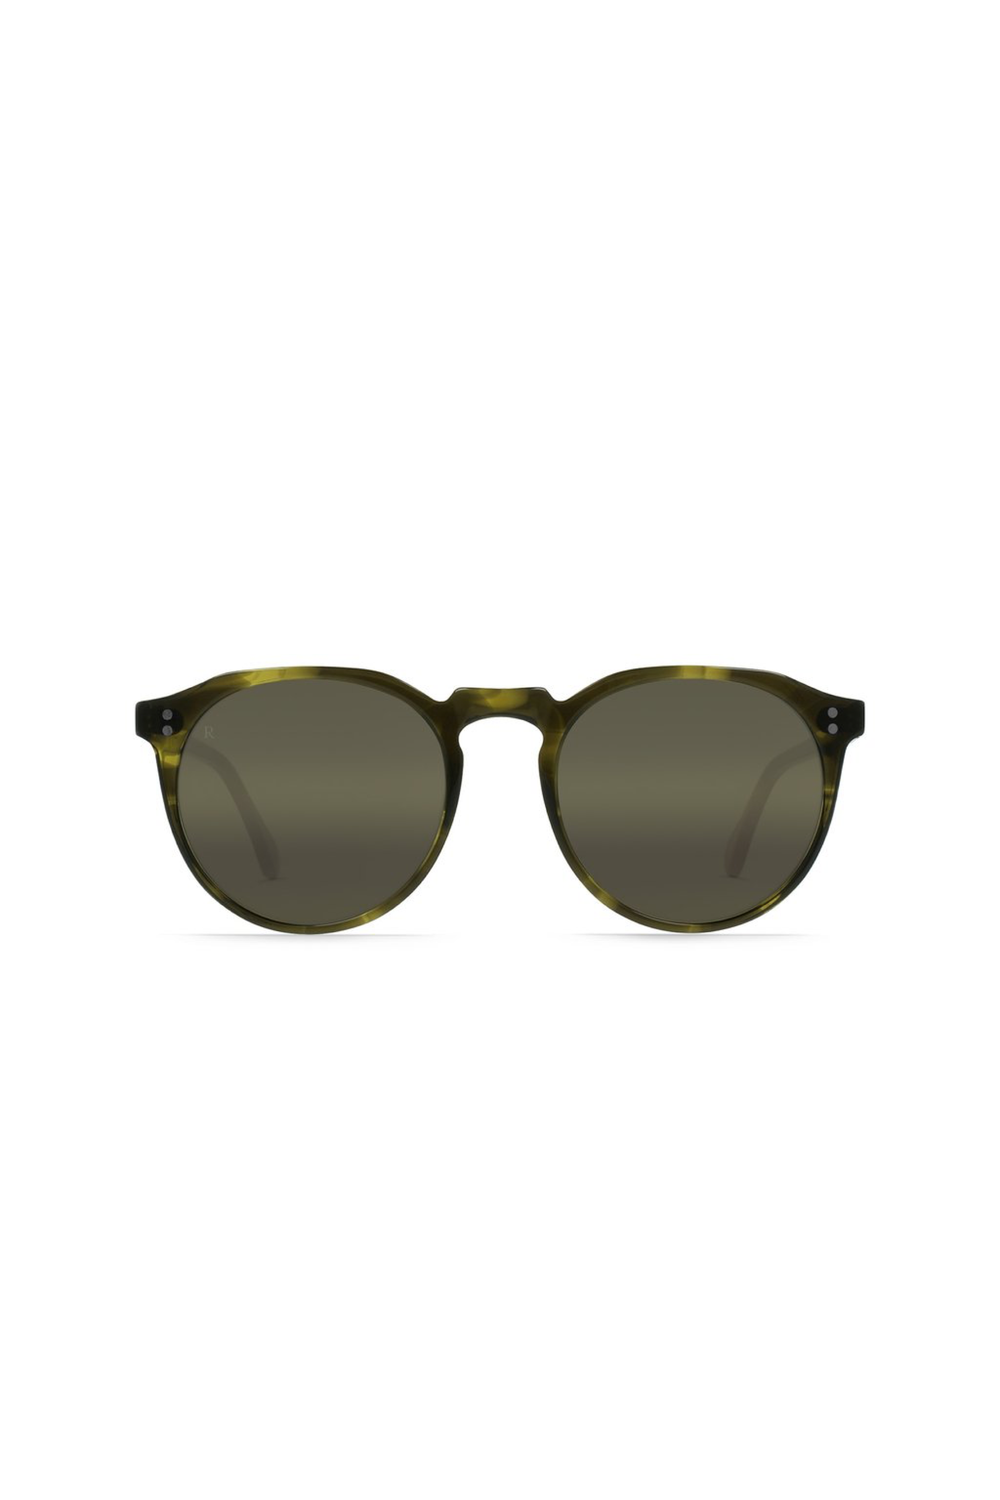 Seagrass Remmy Sunglasses